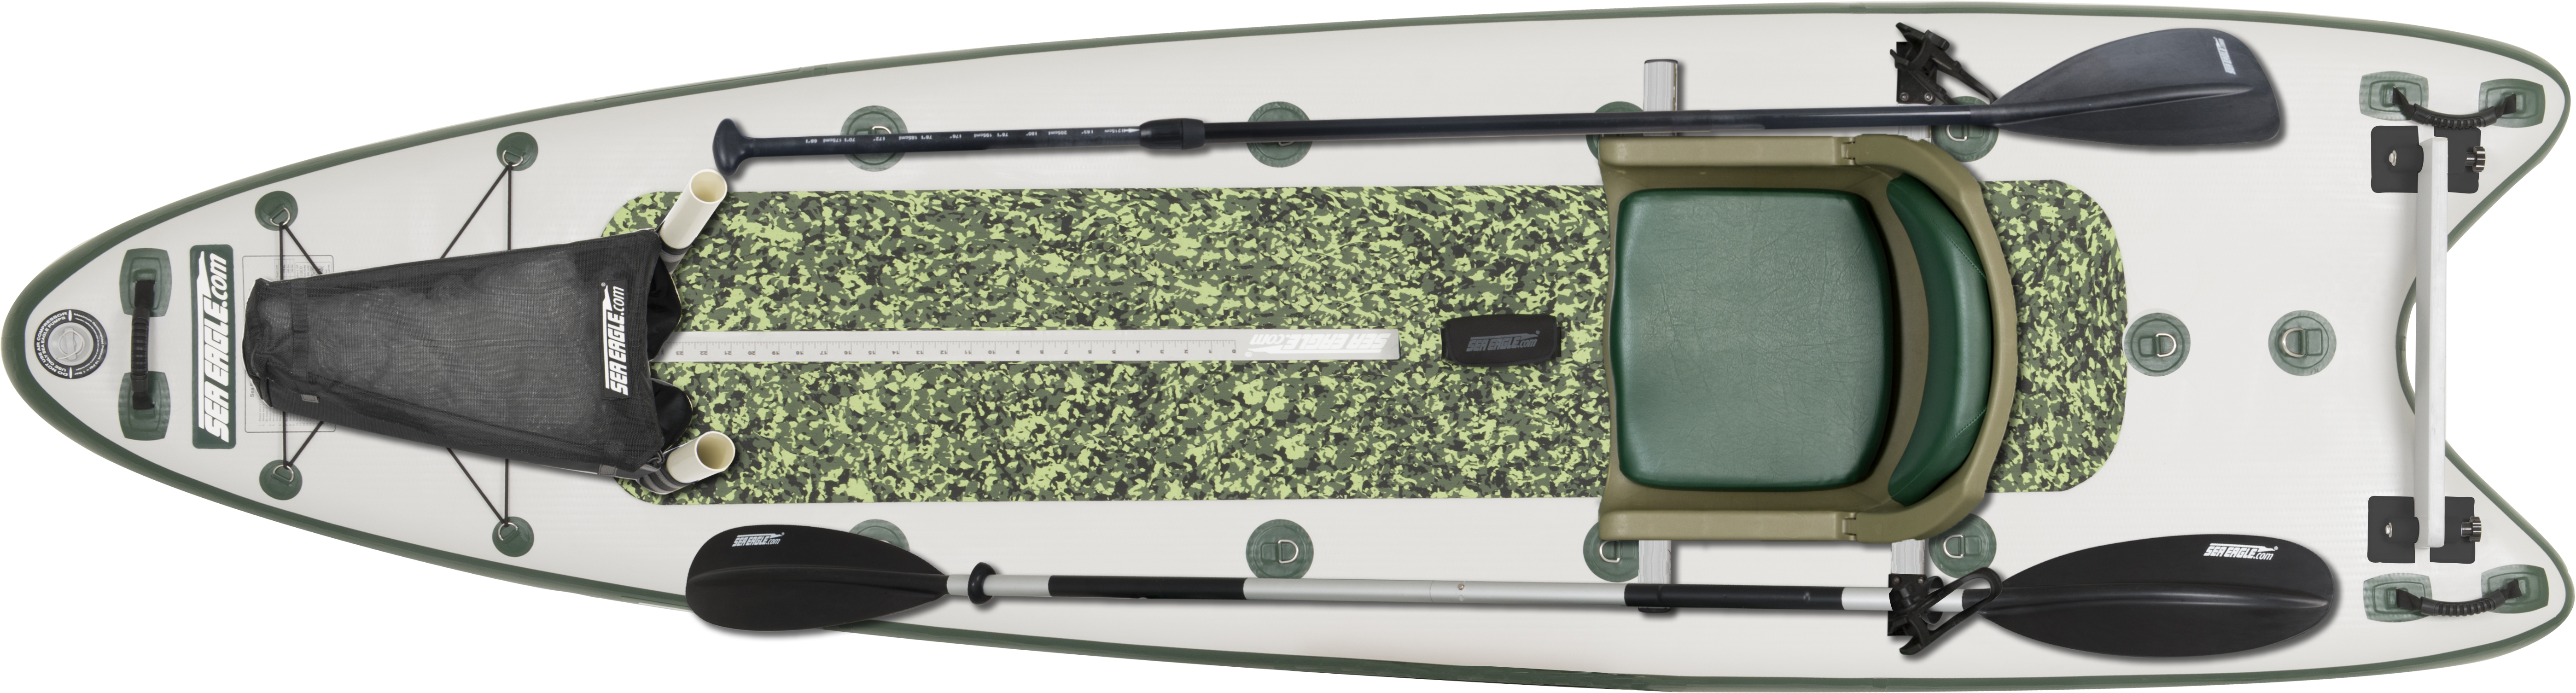 Paddleboards: FishSUP 126 by Sea Eagle - Image 4481